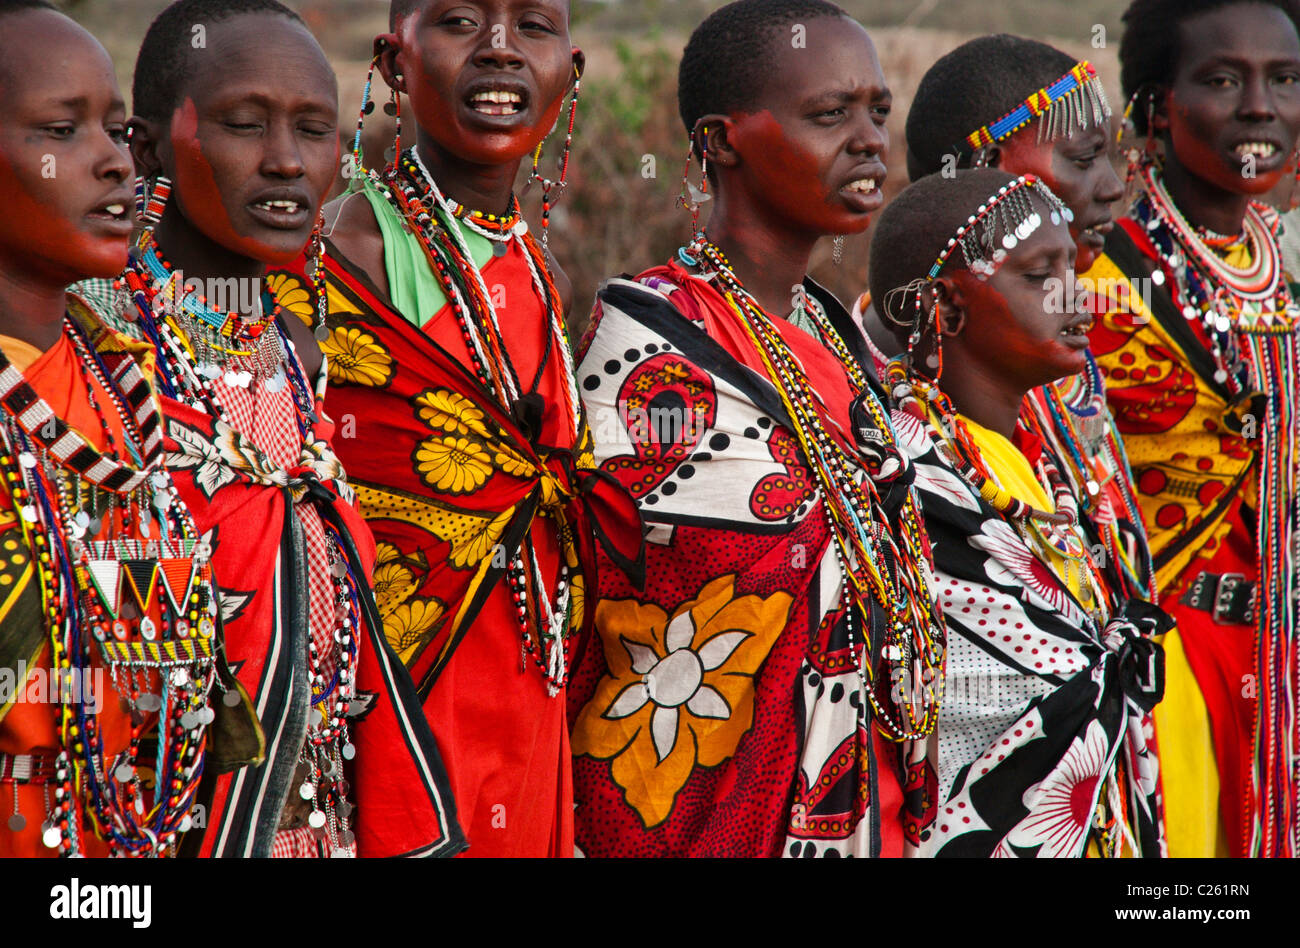 Black Women Africa Traditional Immagini E Fotos Stock Alamy